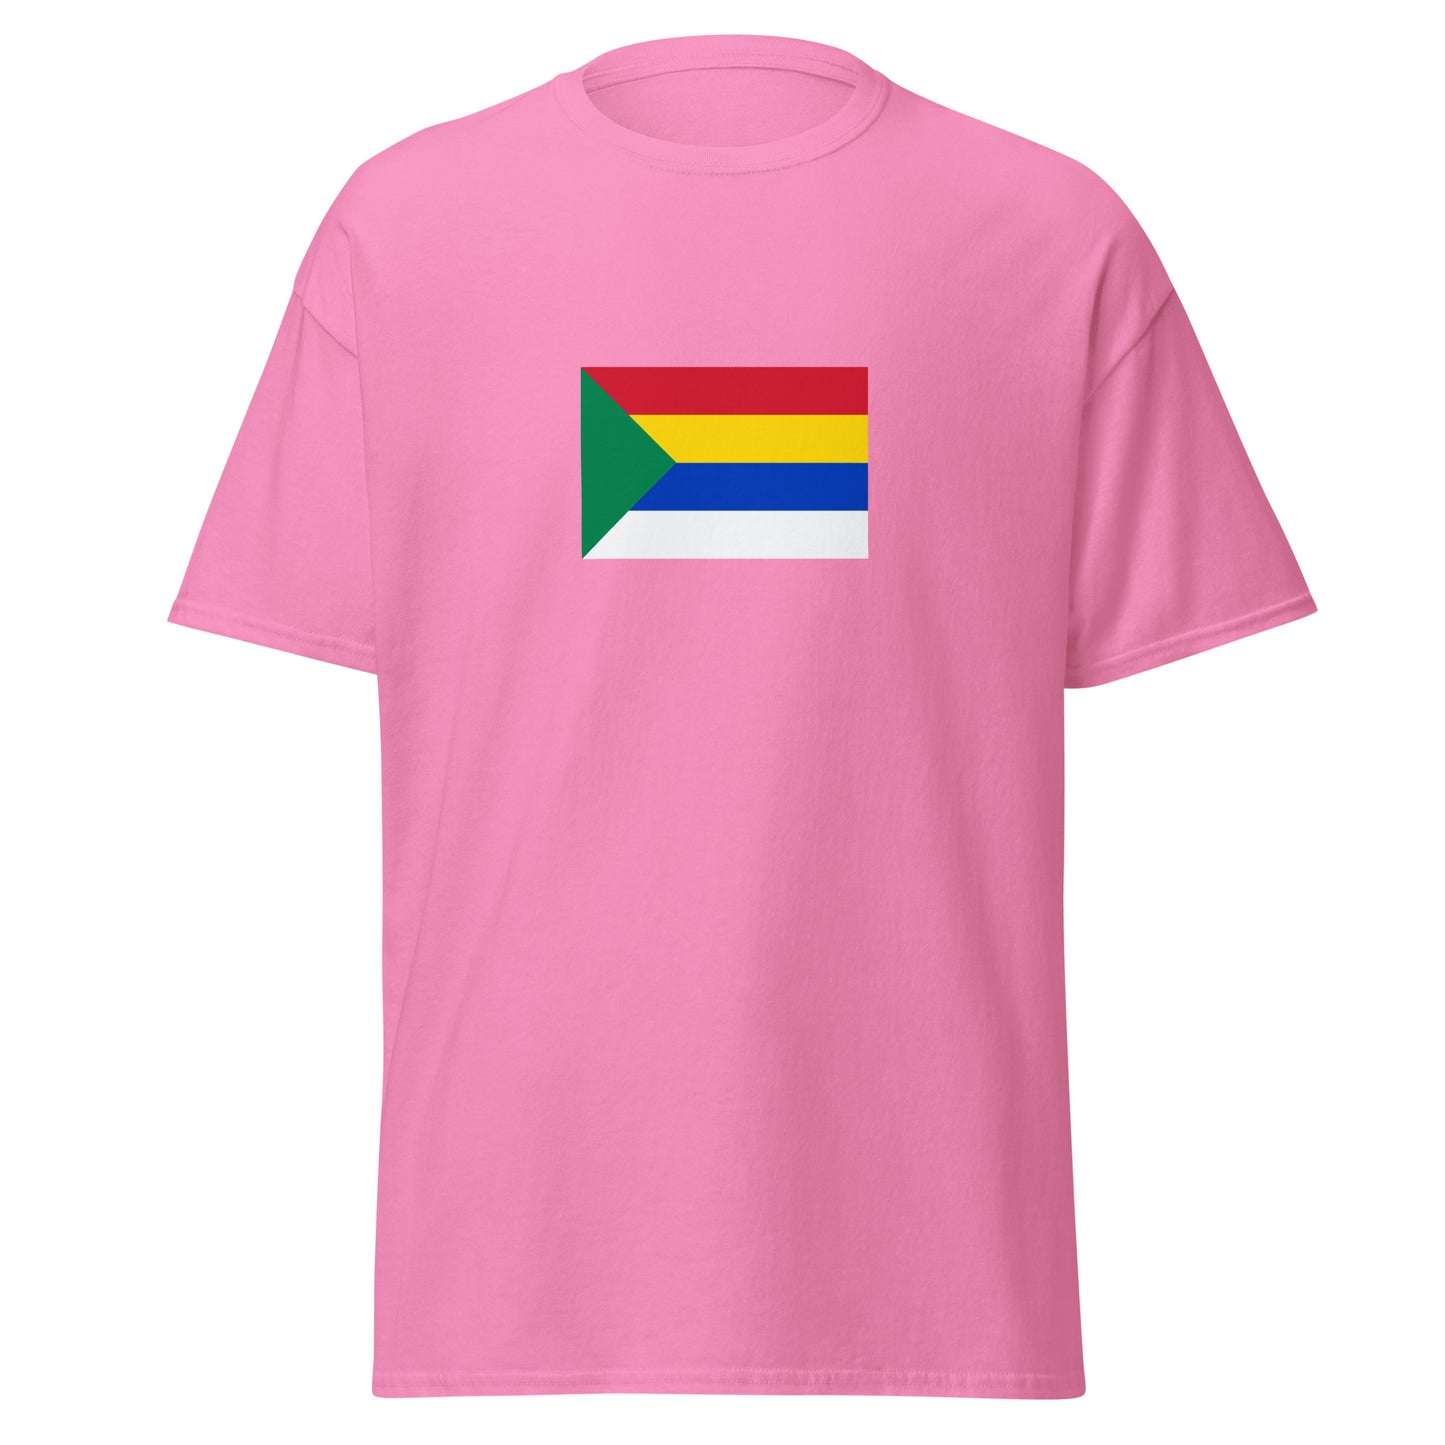 Israel - Druze | Ethnic Israel Flag Interactive T-shirt